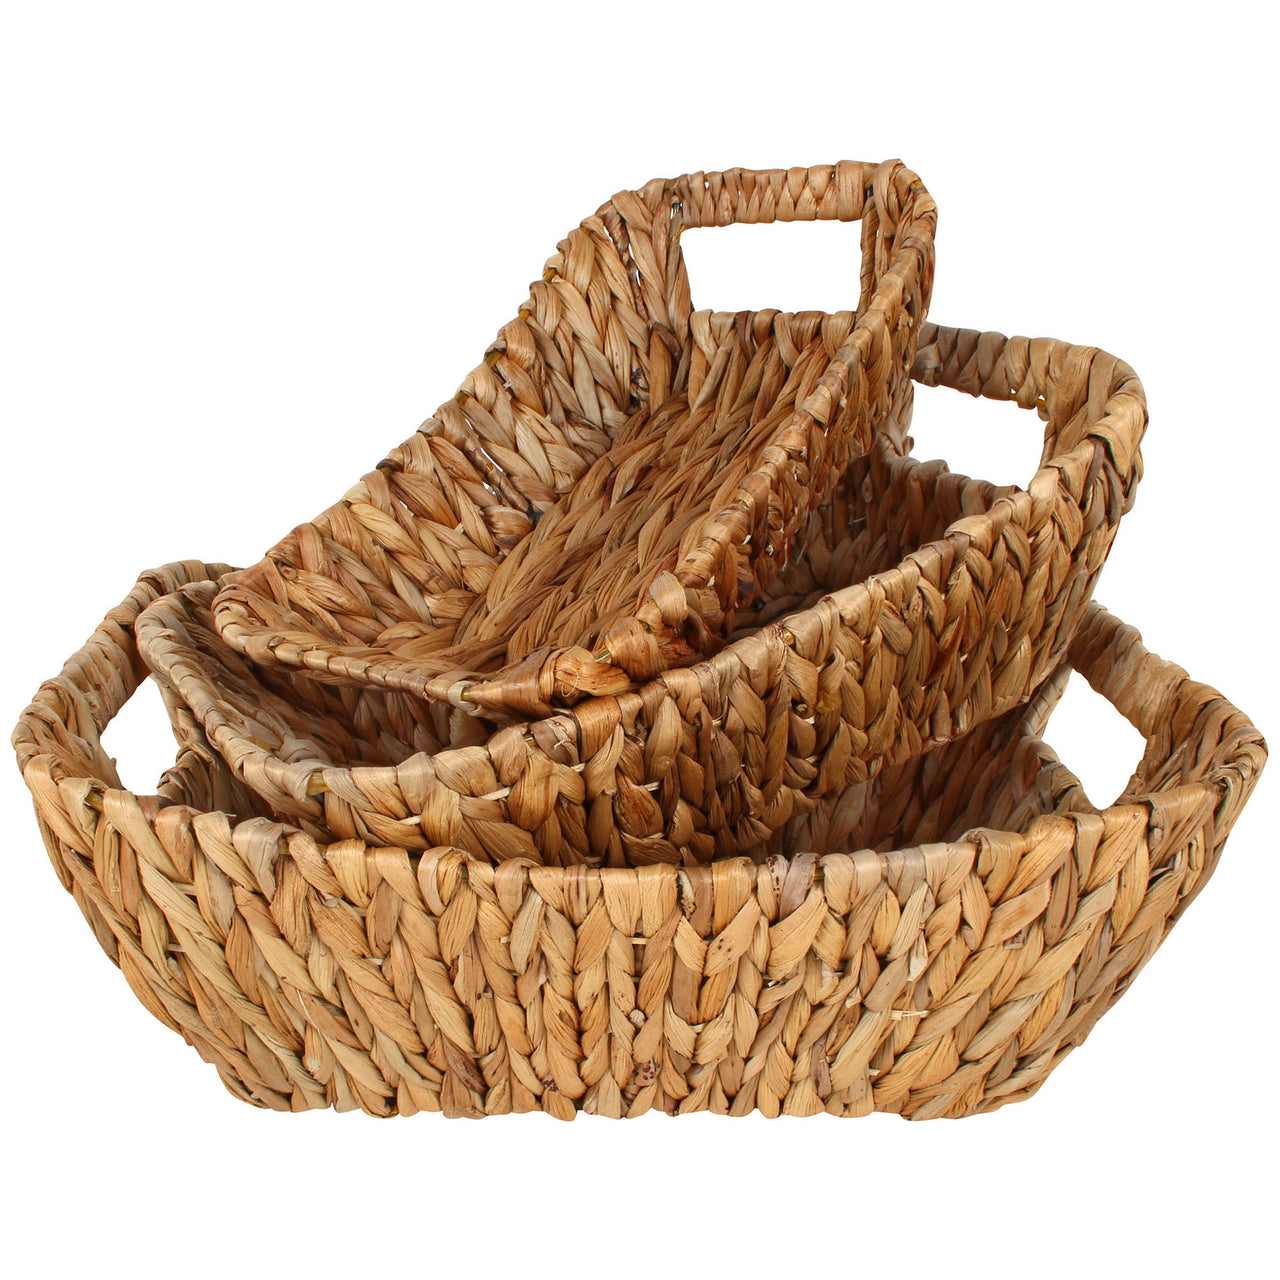 3 Piece Hyace Water Hyacinth Basket Set